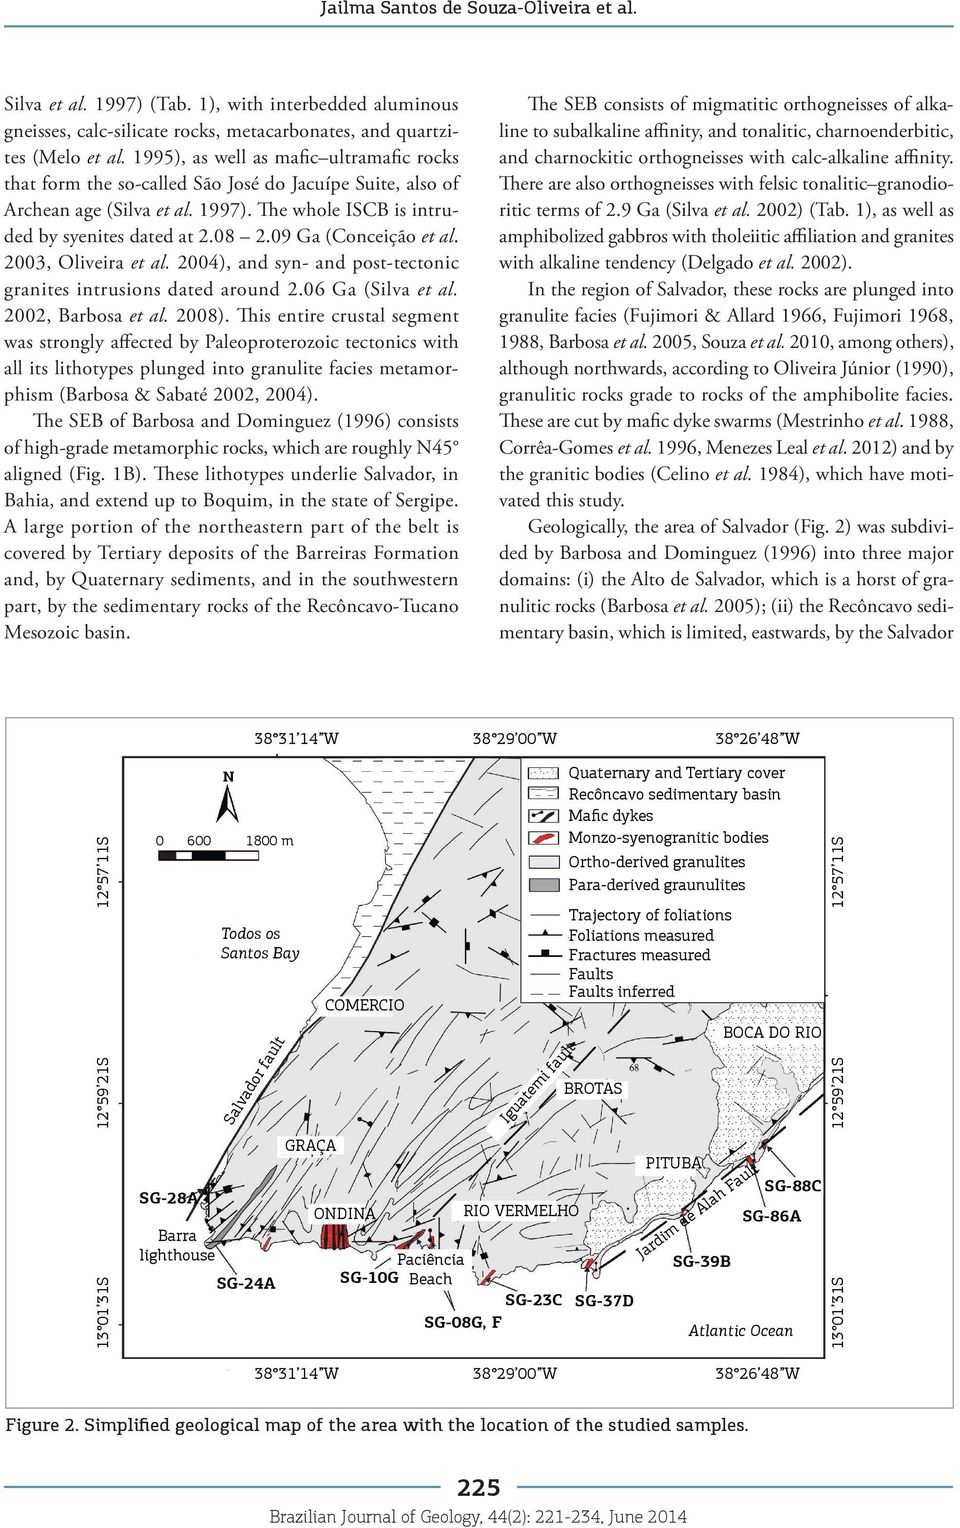 09 Ga (Conceição et al. 2003, Oliveira et al. 2004), and syn- and post-tectonic granites intrusions dated around 2.06 Ga (Silva et al. 2002, Barbosa et al. 2008).